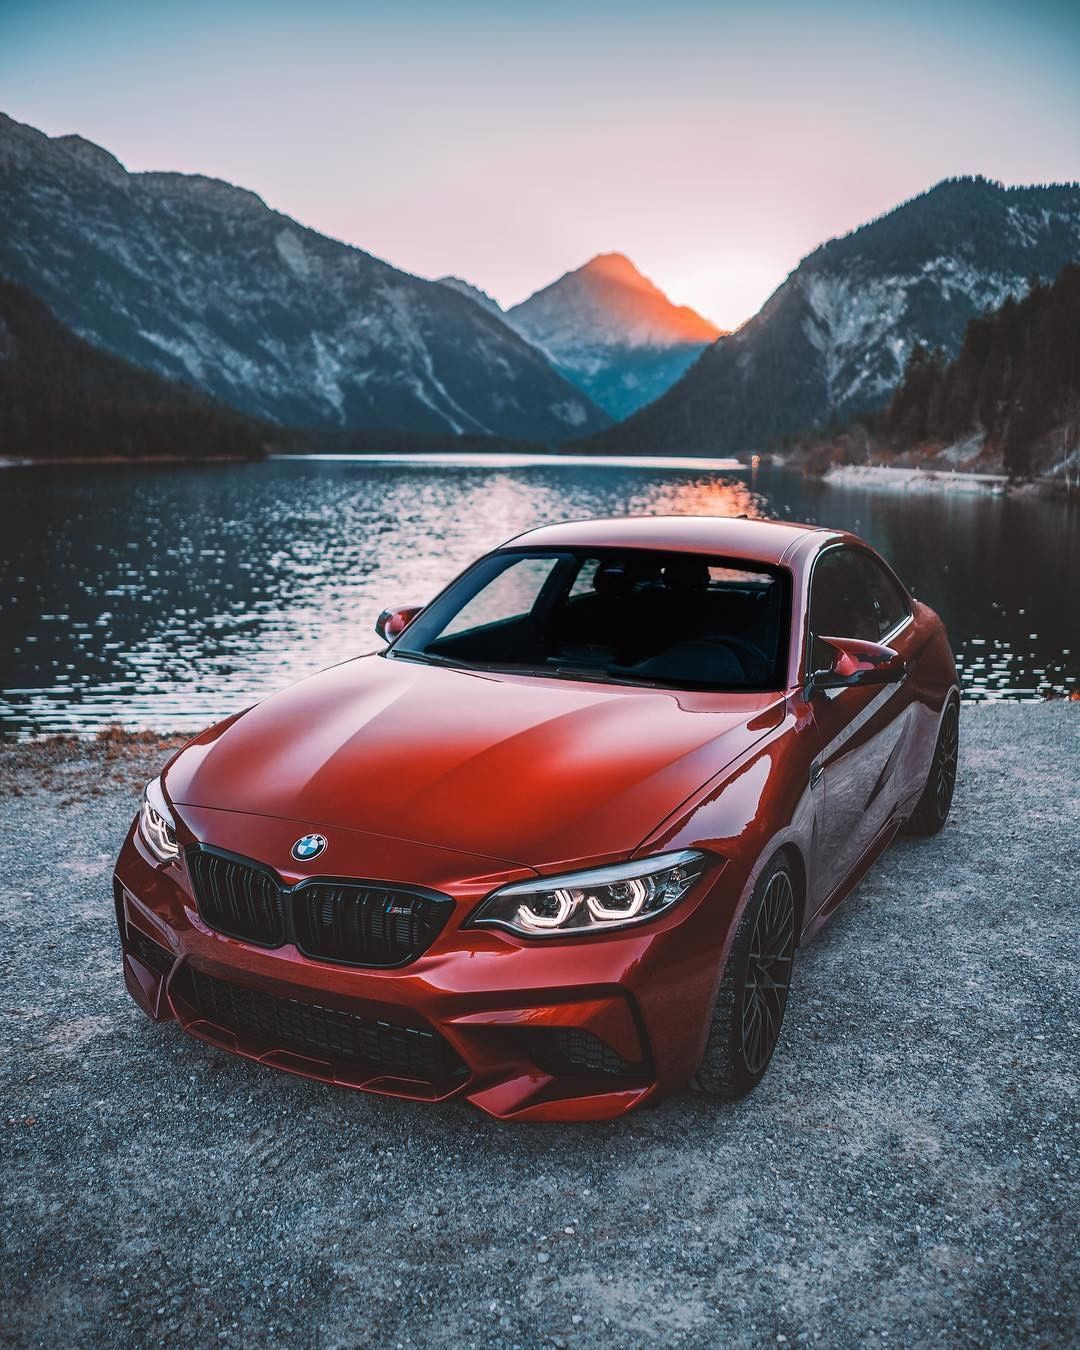 BMW on Instagram: “Confidence breeds beauty. The BMW M2